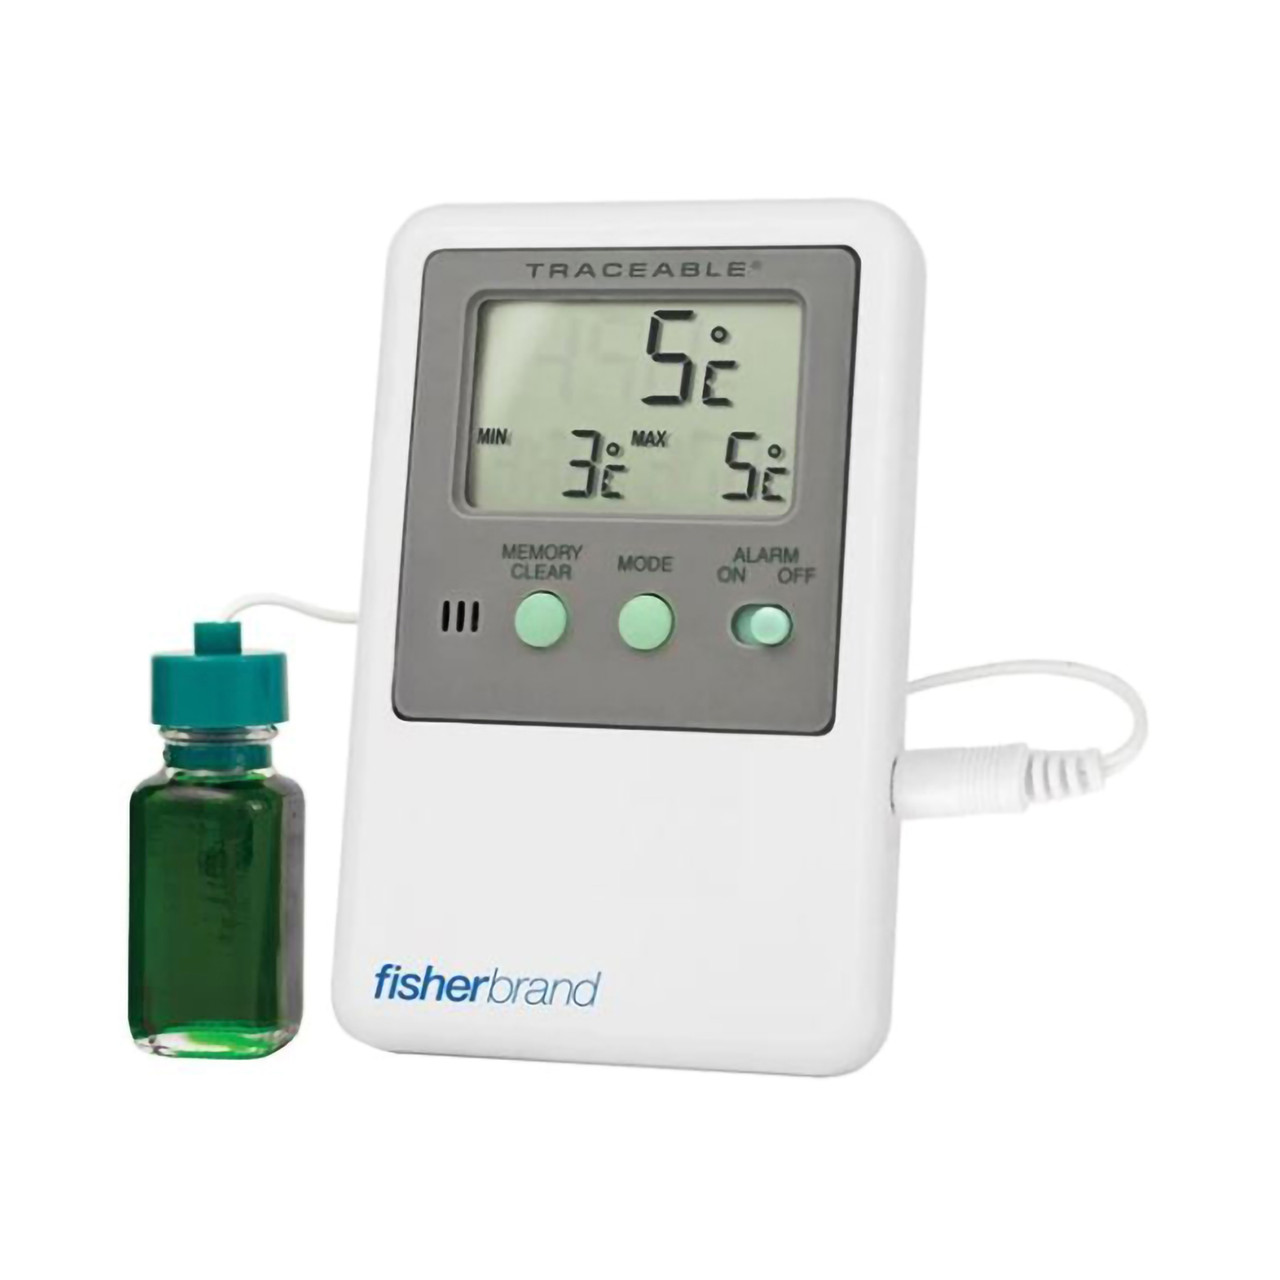 schrobben Induceren leren Fisherbrand Traceable Digital Refrigerator / Freezer Thermometer with Alarm  - Simply Medical